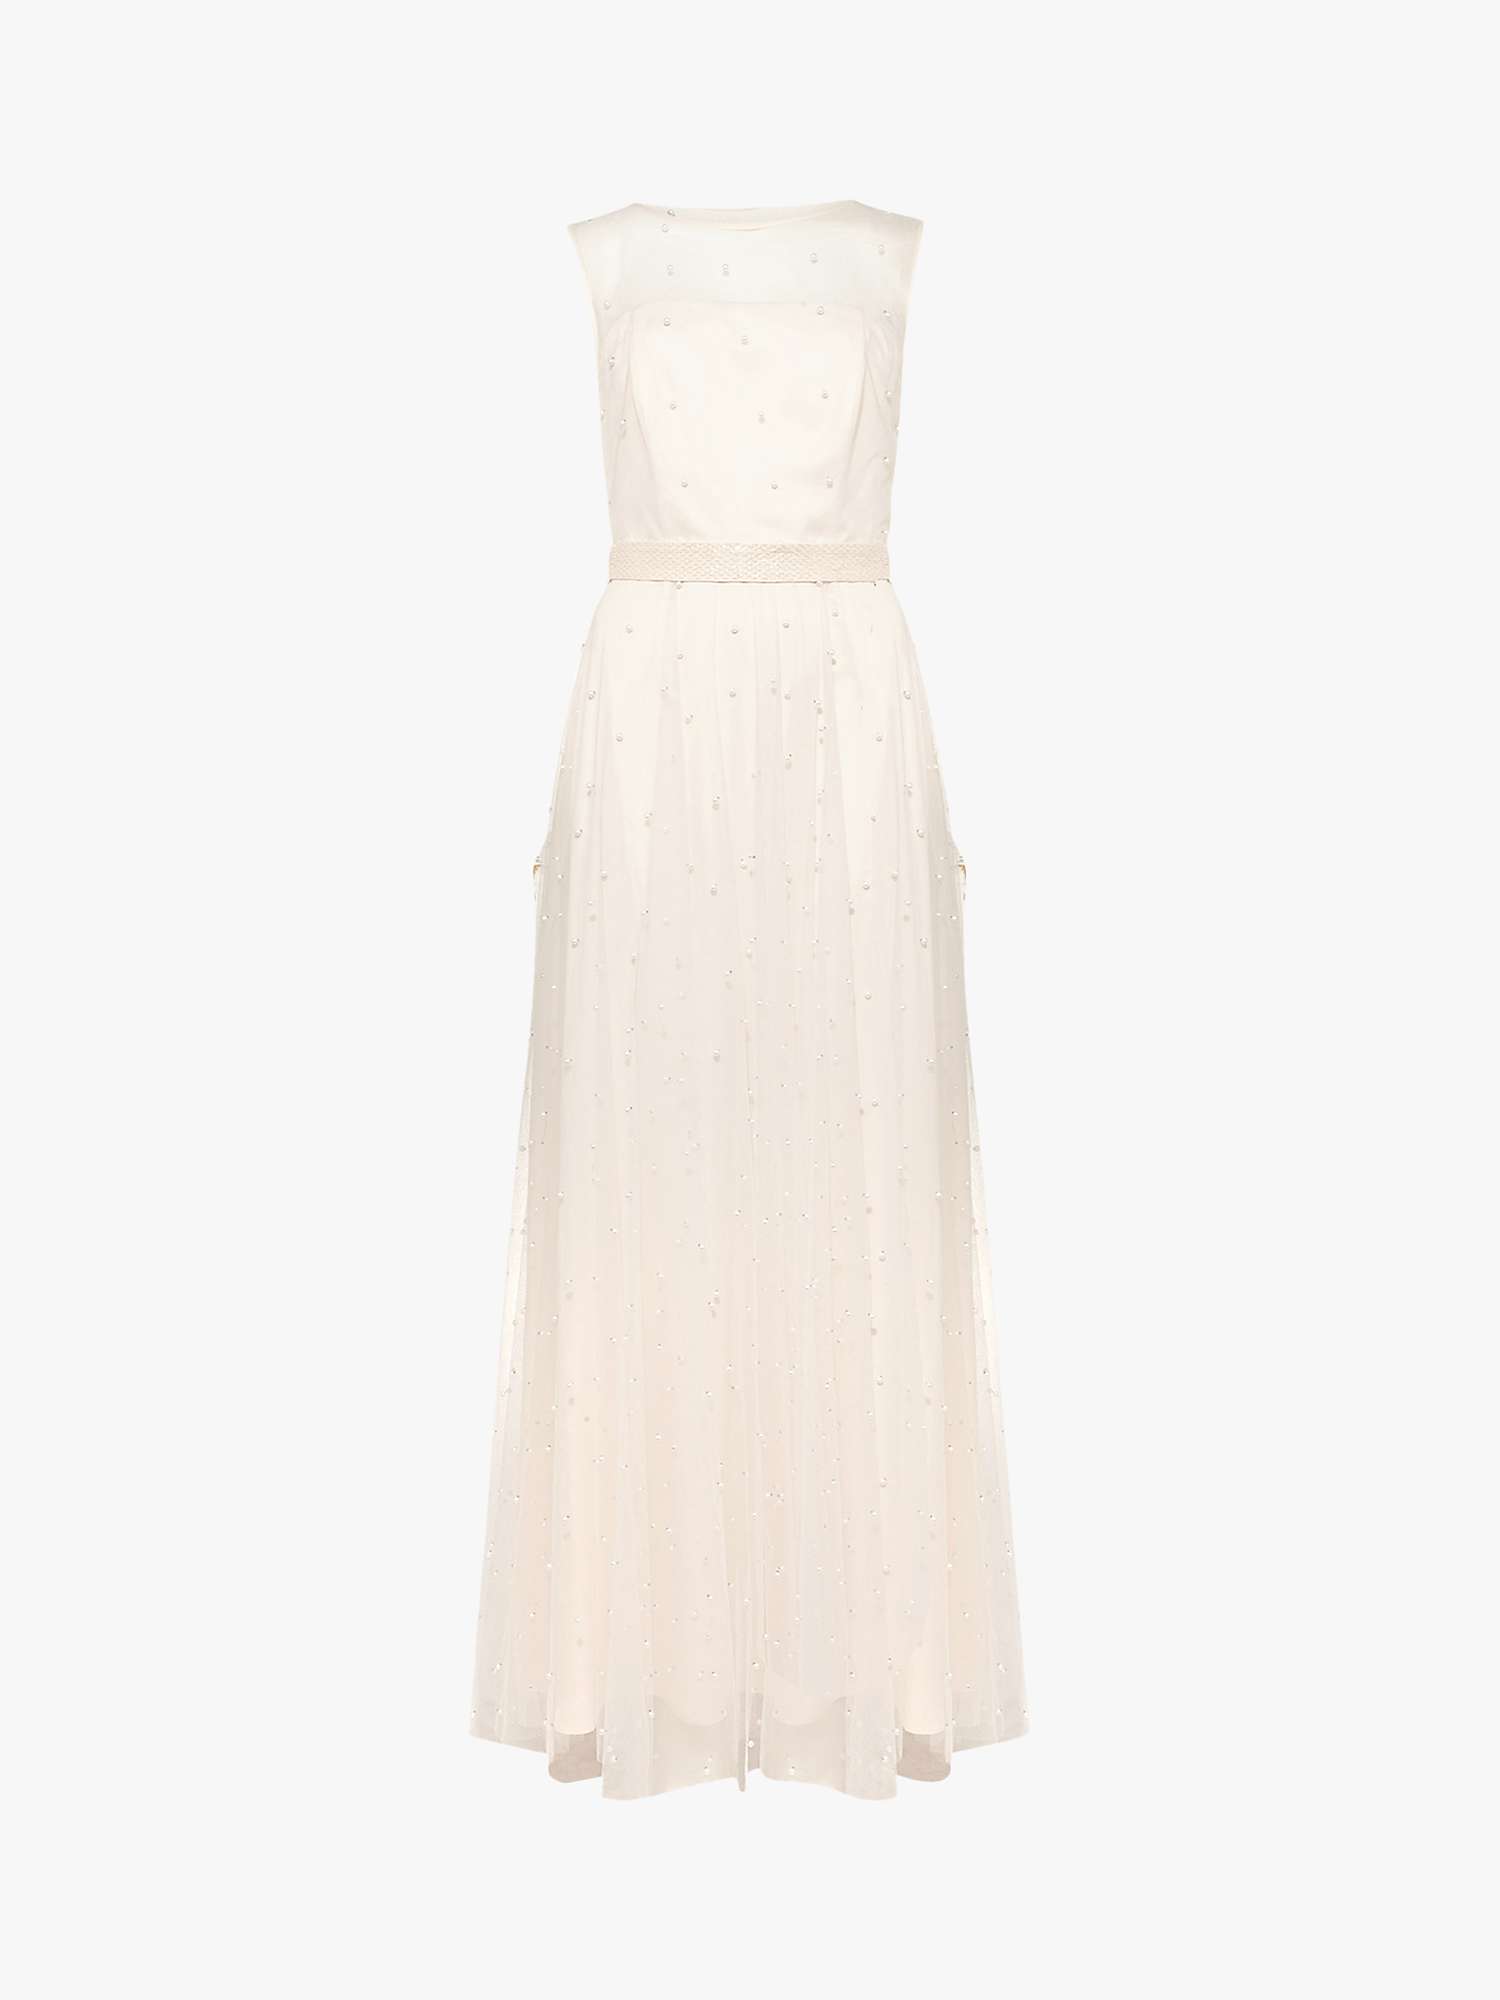 Buy Phase Eight Genova Tulle Wedding Dress, Old Rose Online at johnlewis.com